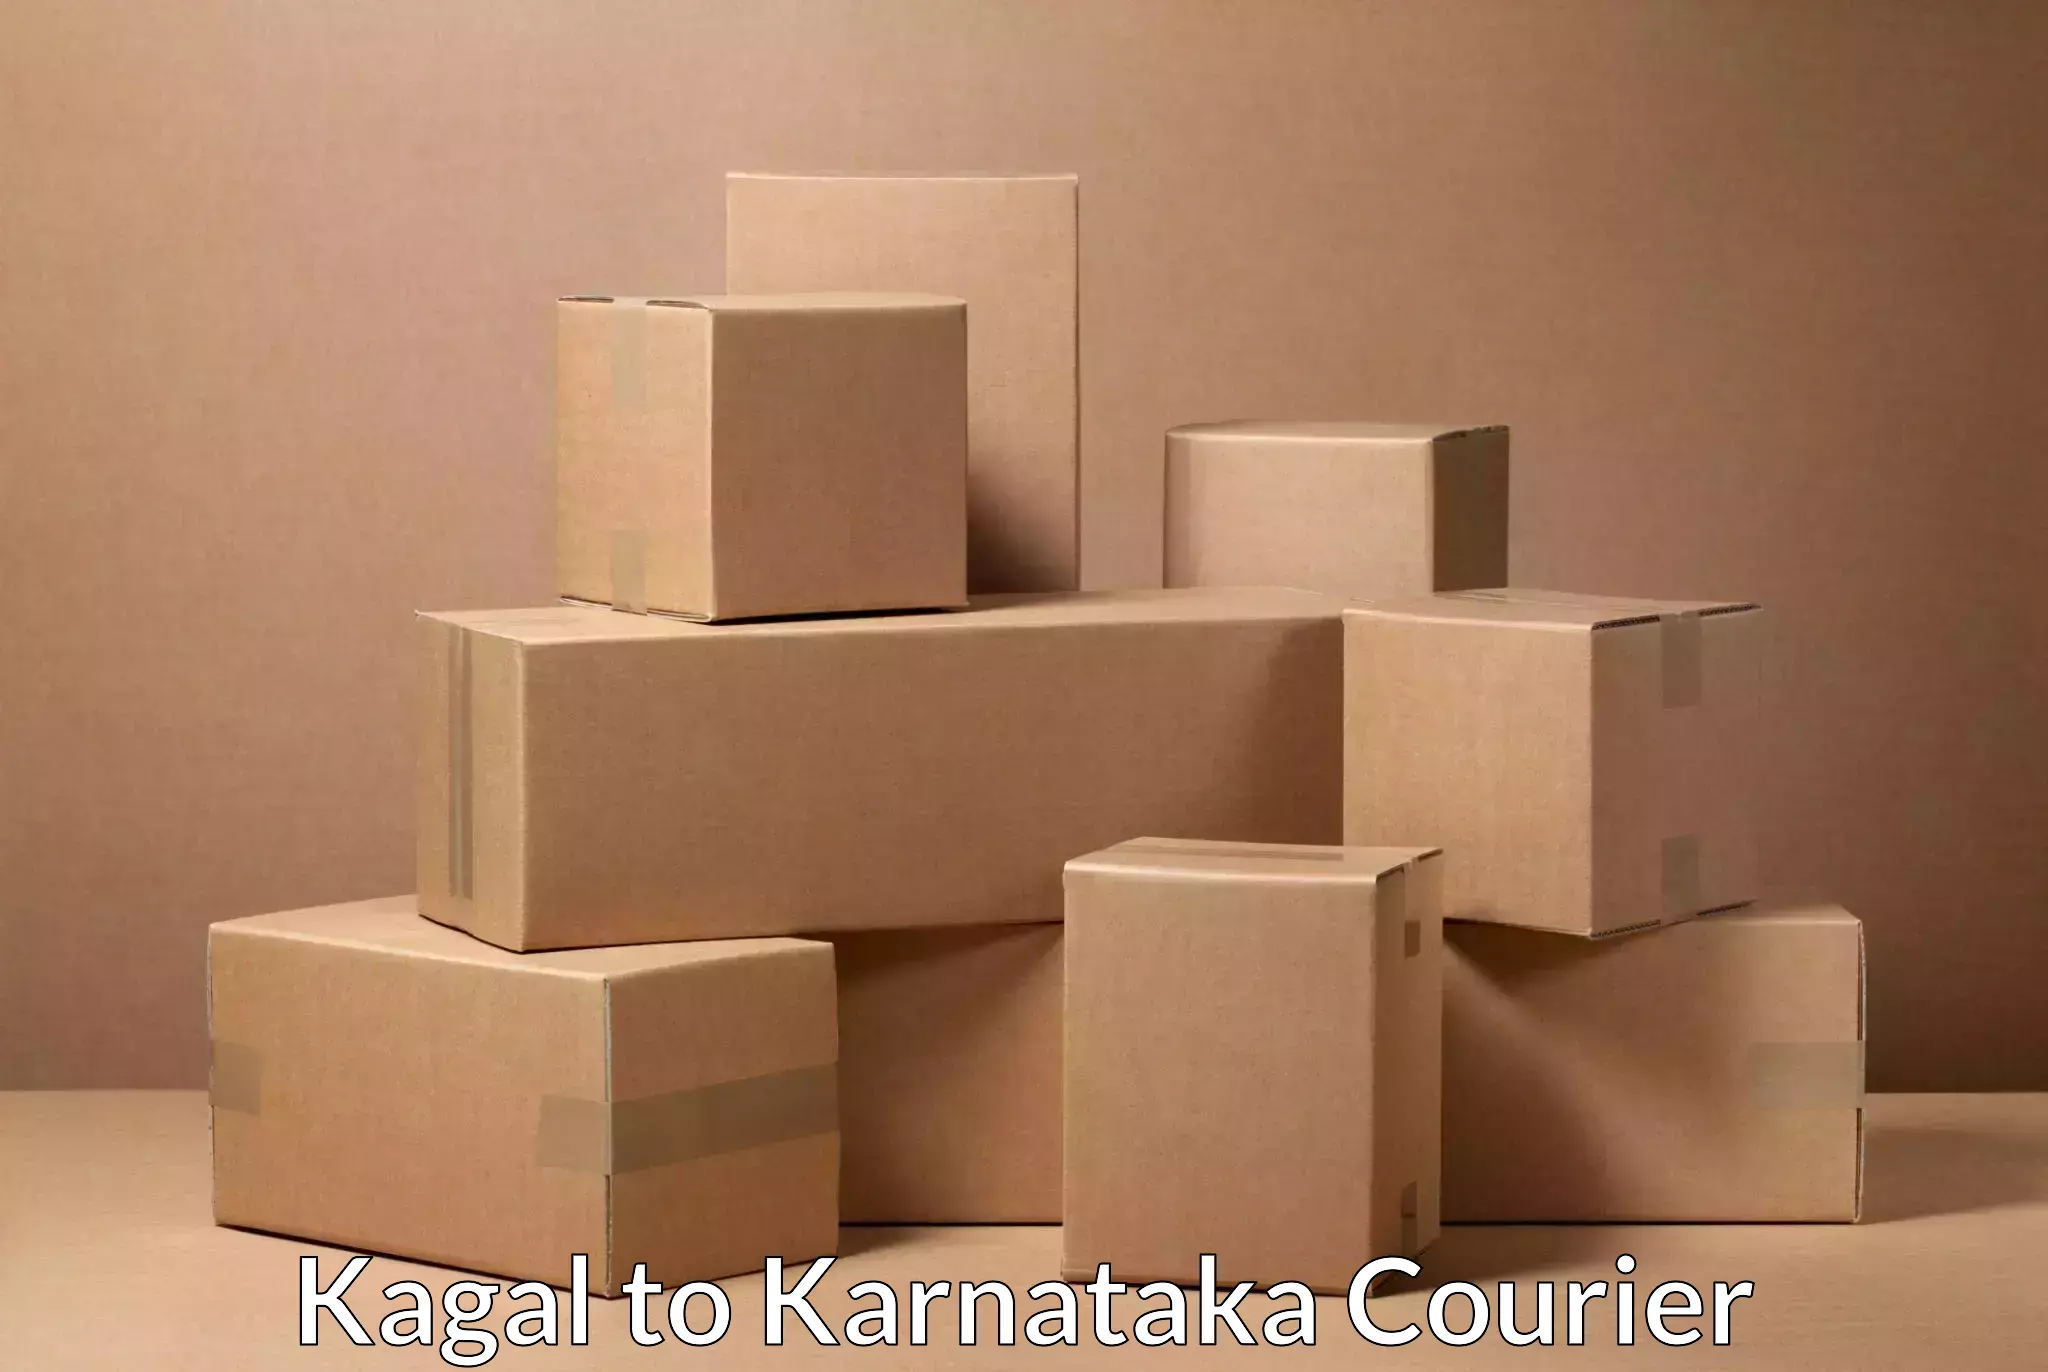 Efficient order fulfillment in Kagal to Karnataka